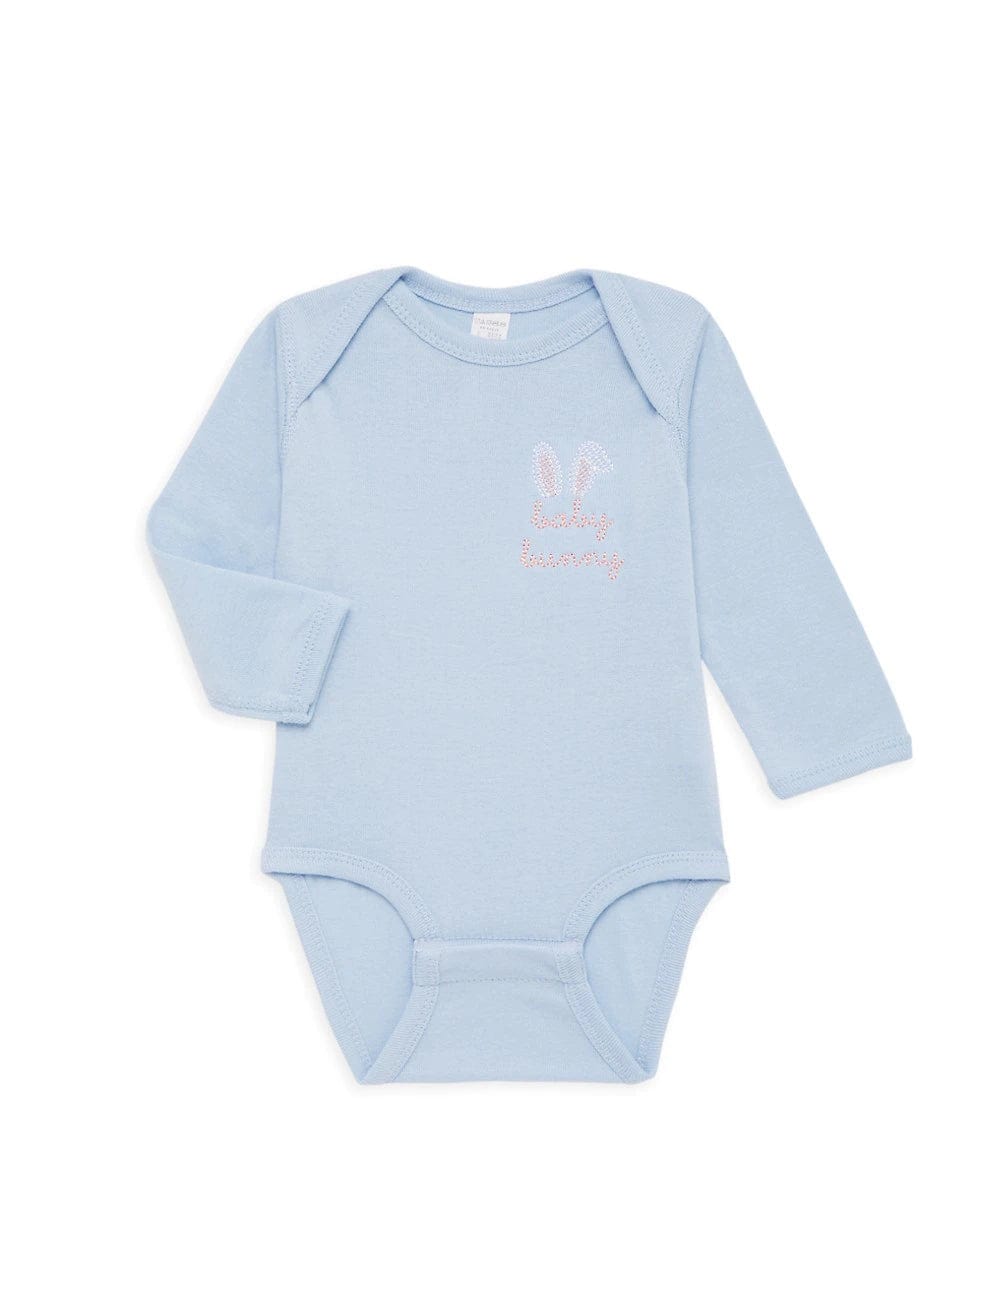 juju + stitch Personalized Custom Embroidered T-shirt Soft Blue / NB "Baby Bunny" Onesie